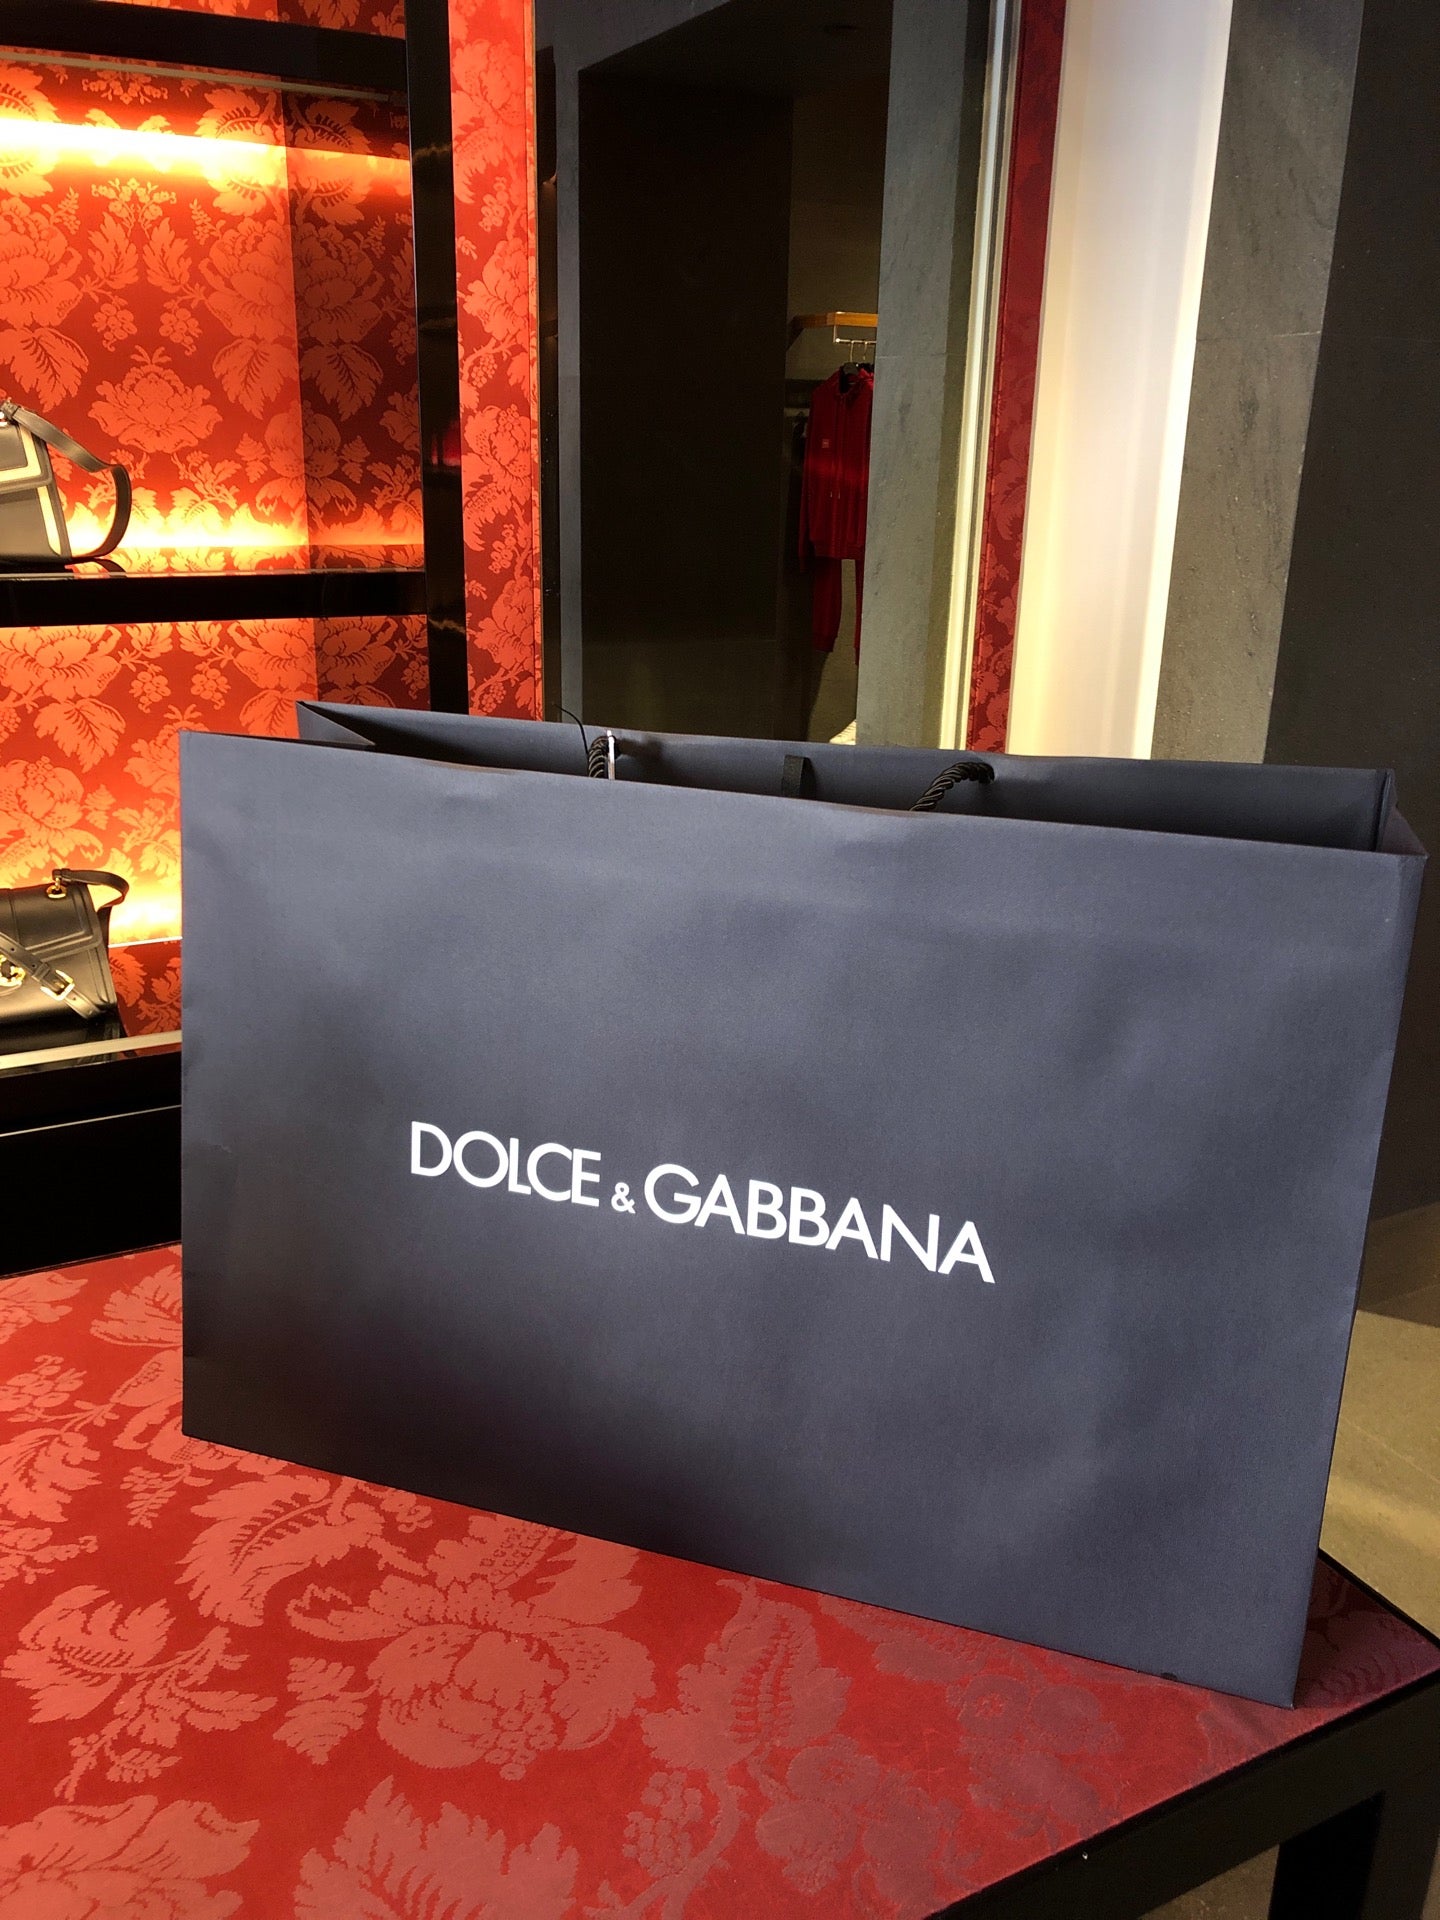 Dolce & Gabbana at Houston Saks Fifth Avenue Galleria Mall, Houston